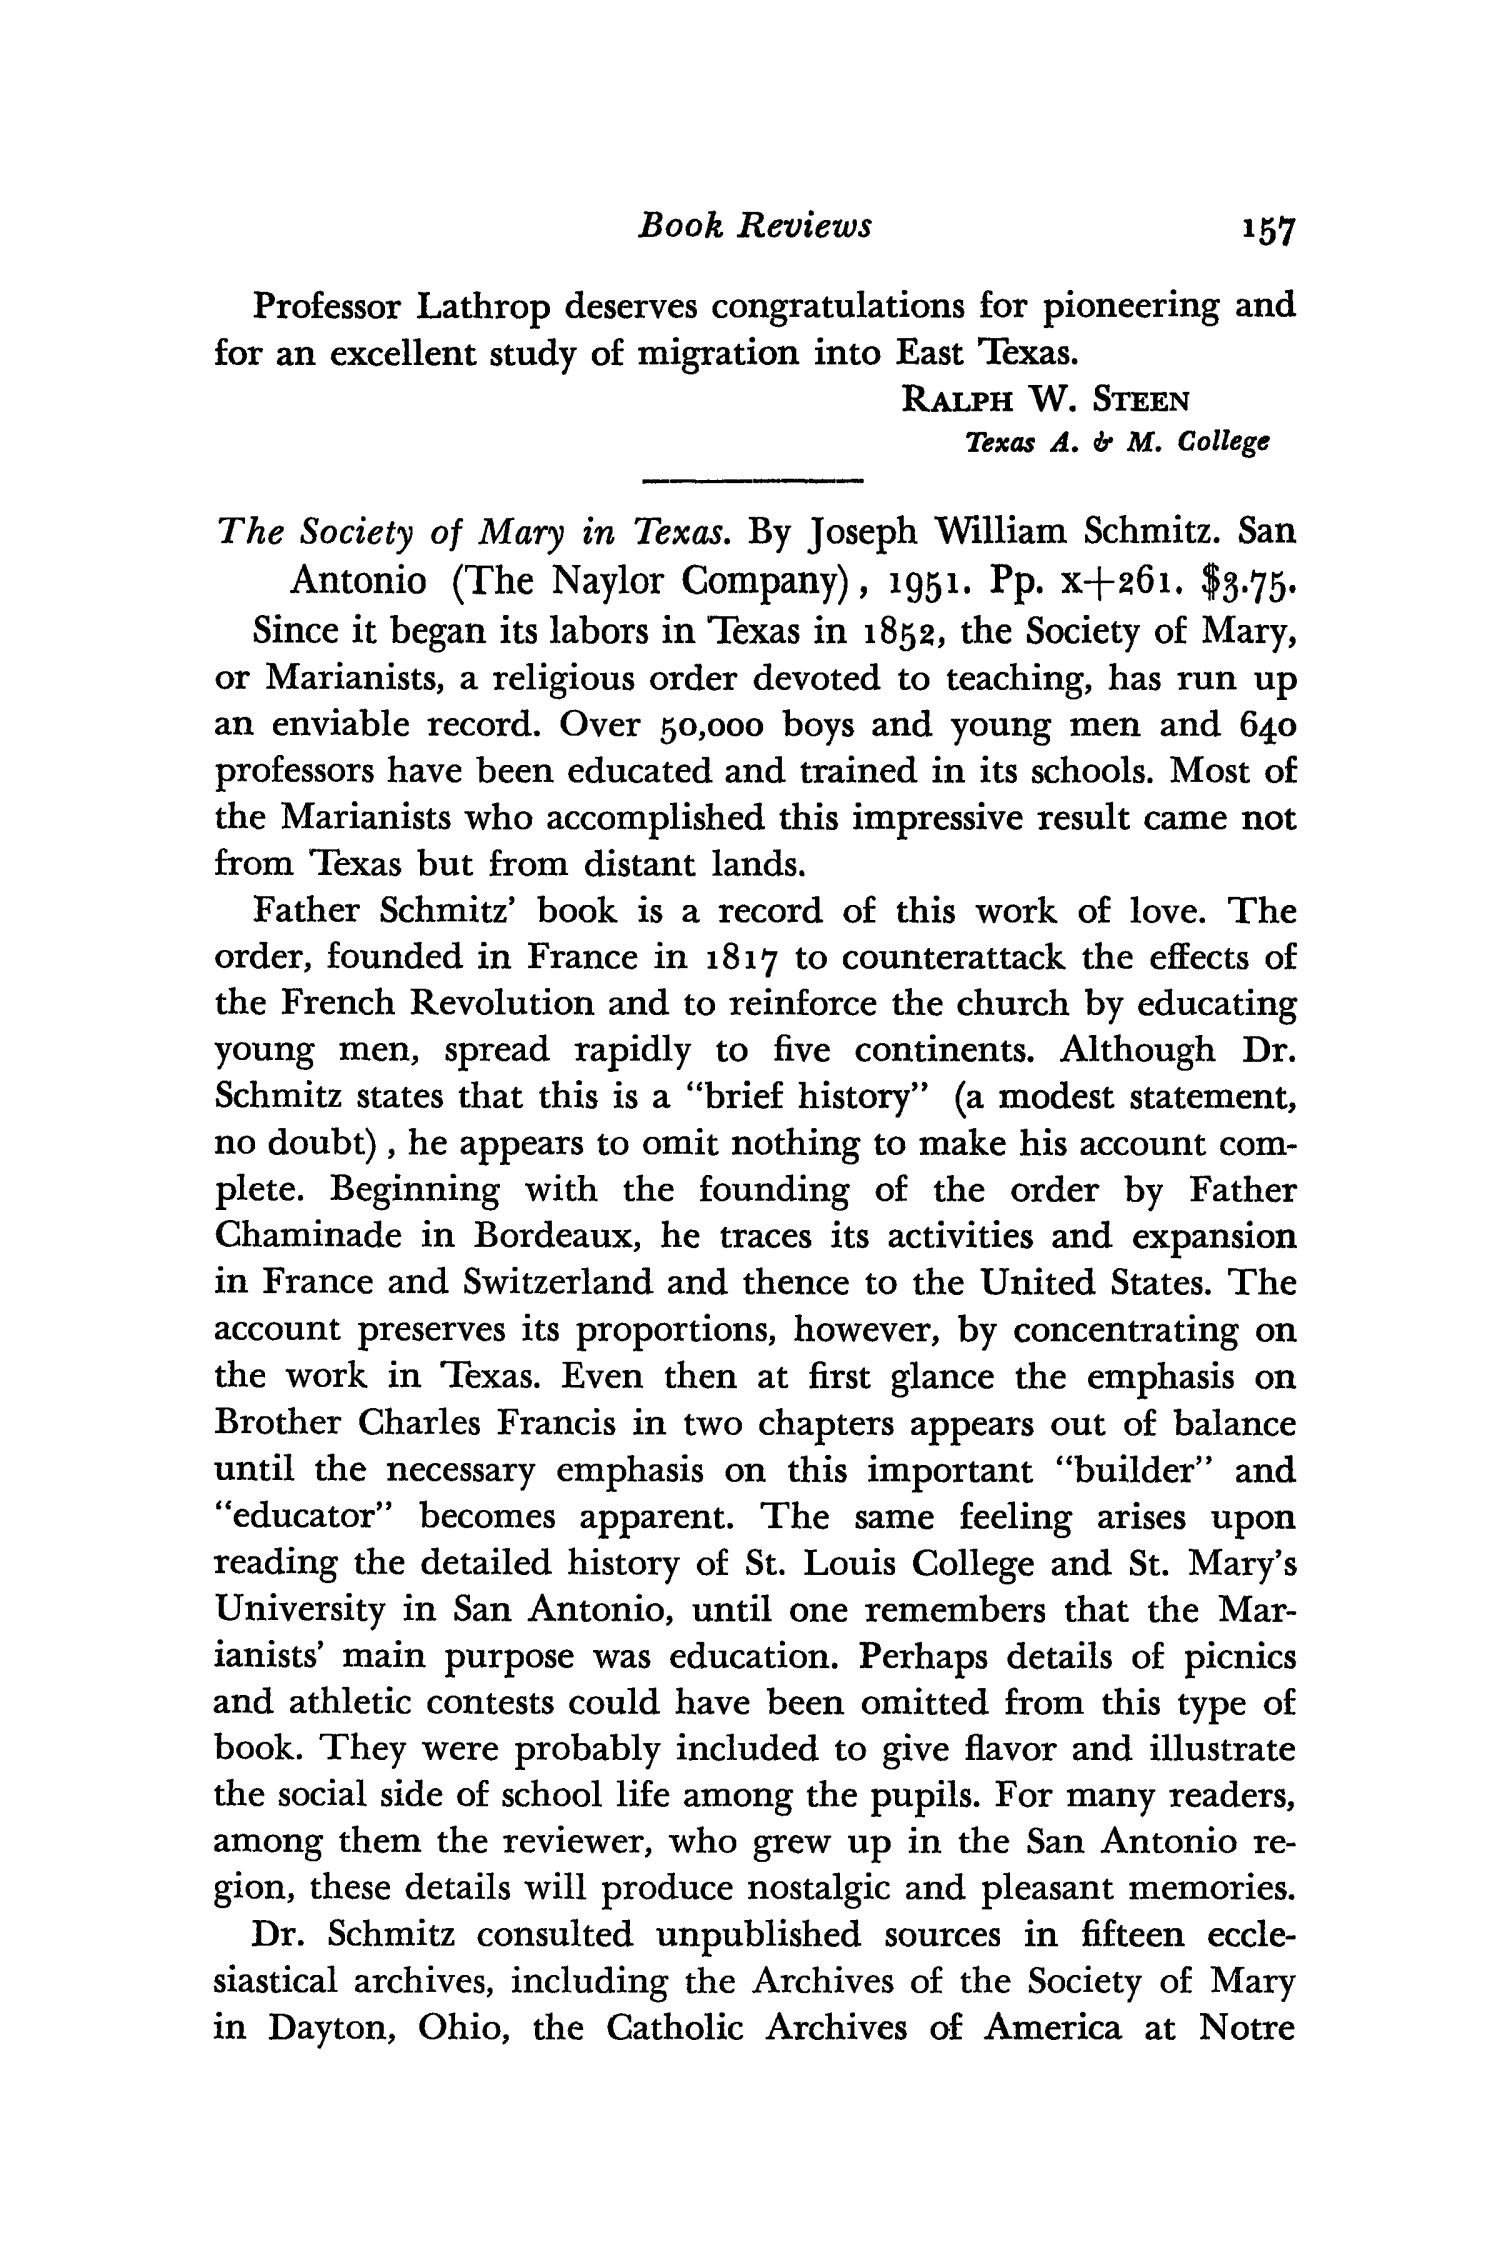 The Southwestern Historical Quarterly, Volume 56, July 1952 - April, 1953
                                                
                                                    157
                                                